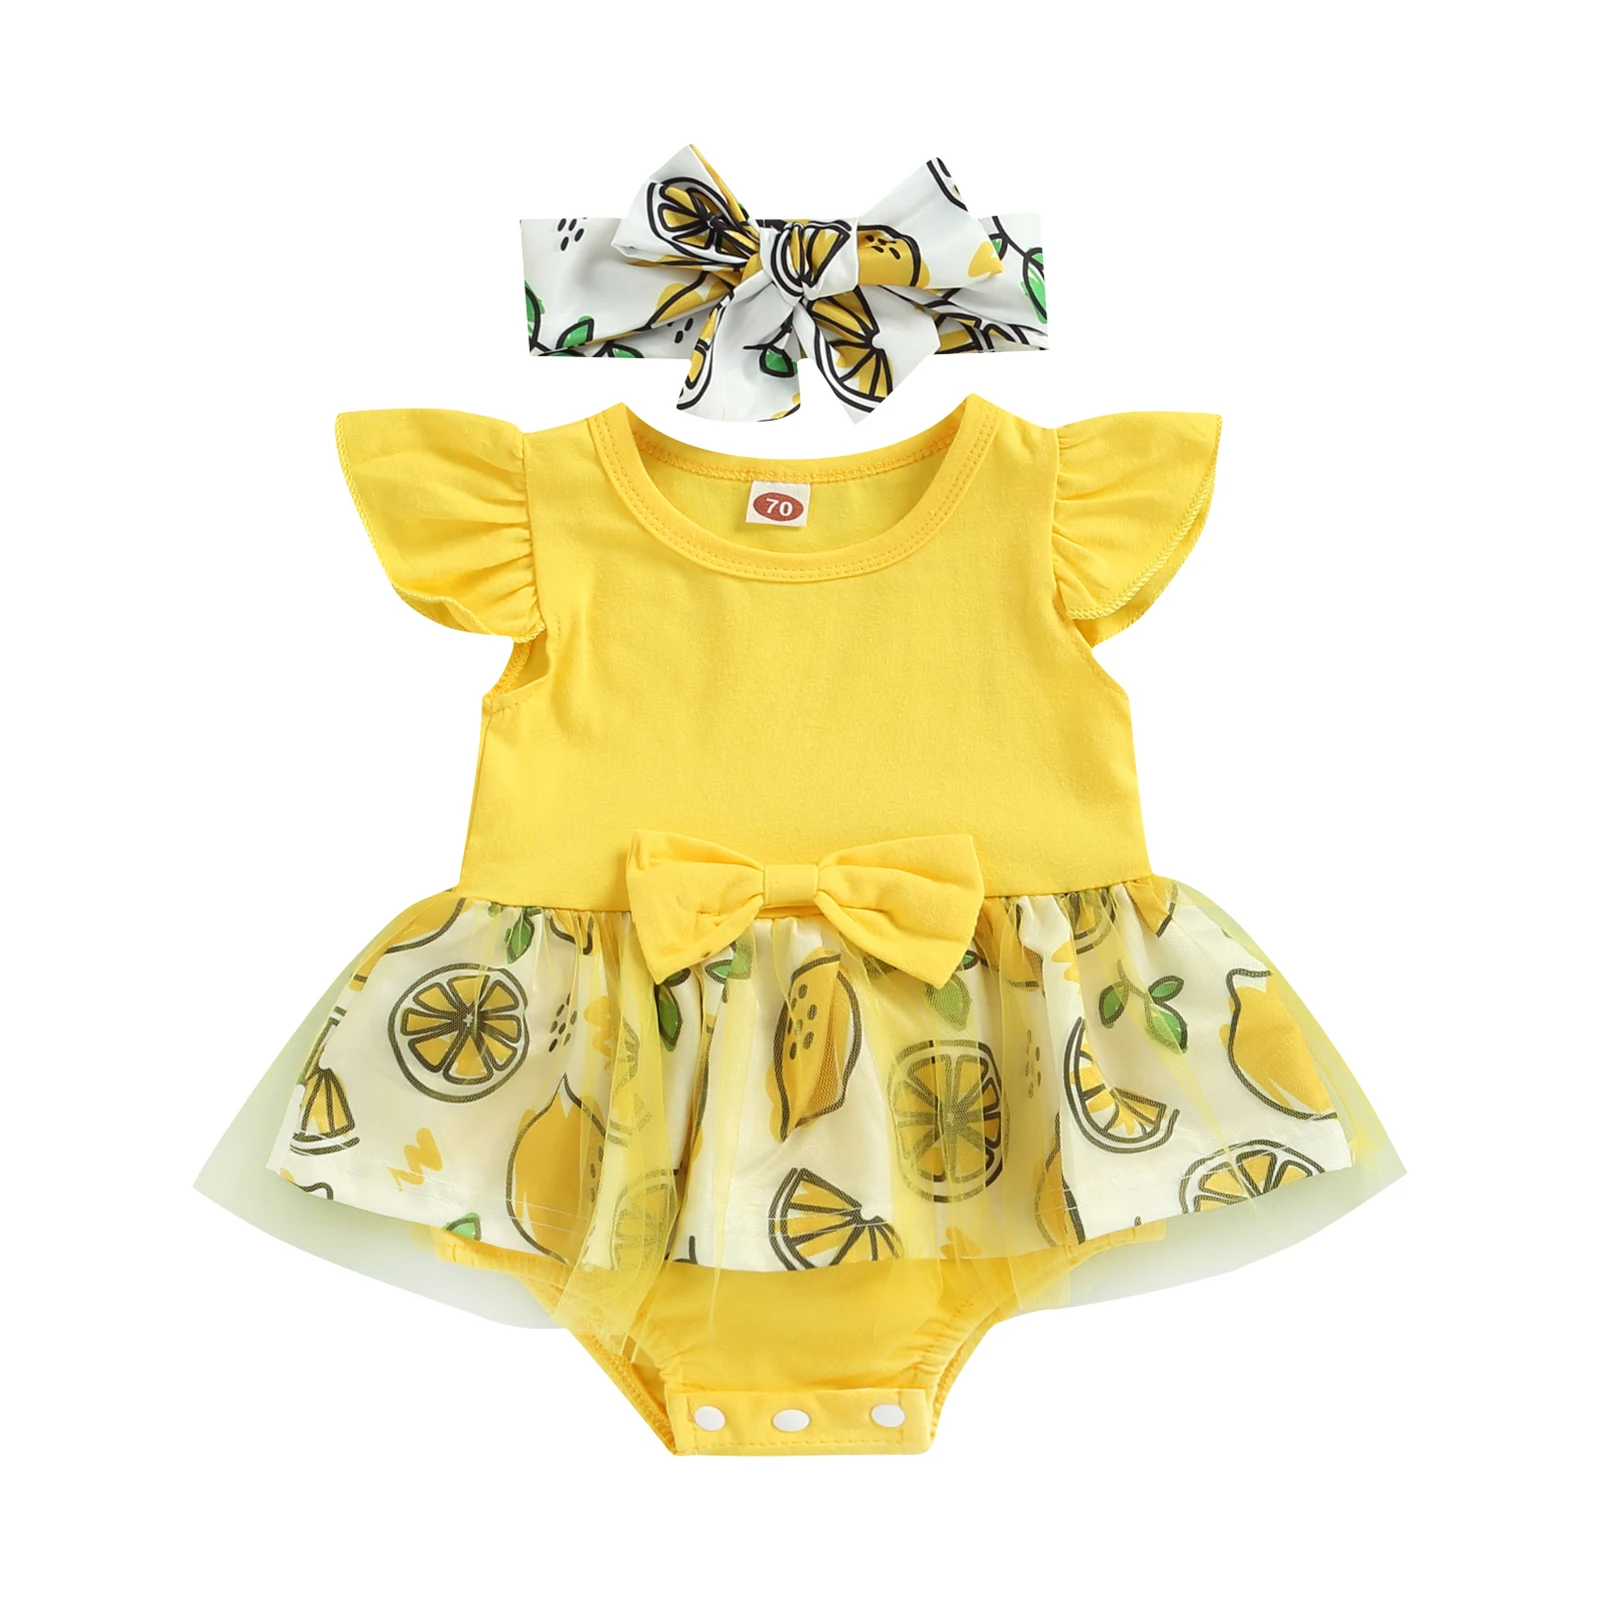 

2Pcs Baby Girls Summer Outfit, Lemon Print Flying-Sleeve Romper Dress + Hairband for Toddler, 0-18 Months